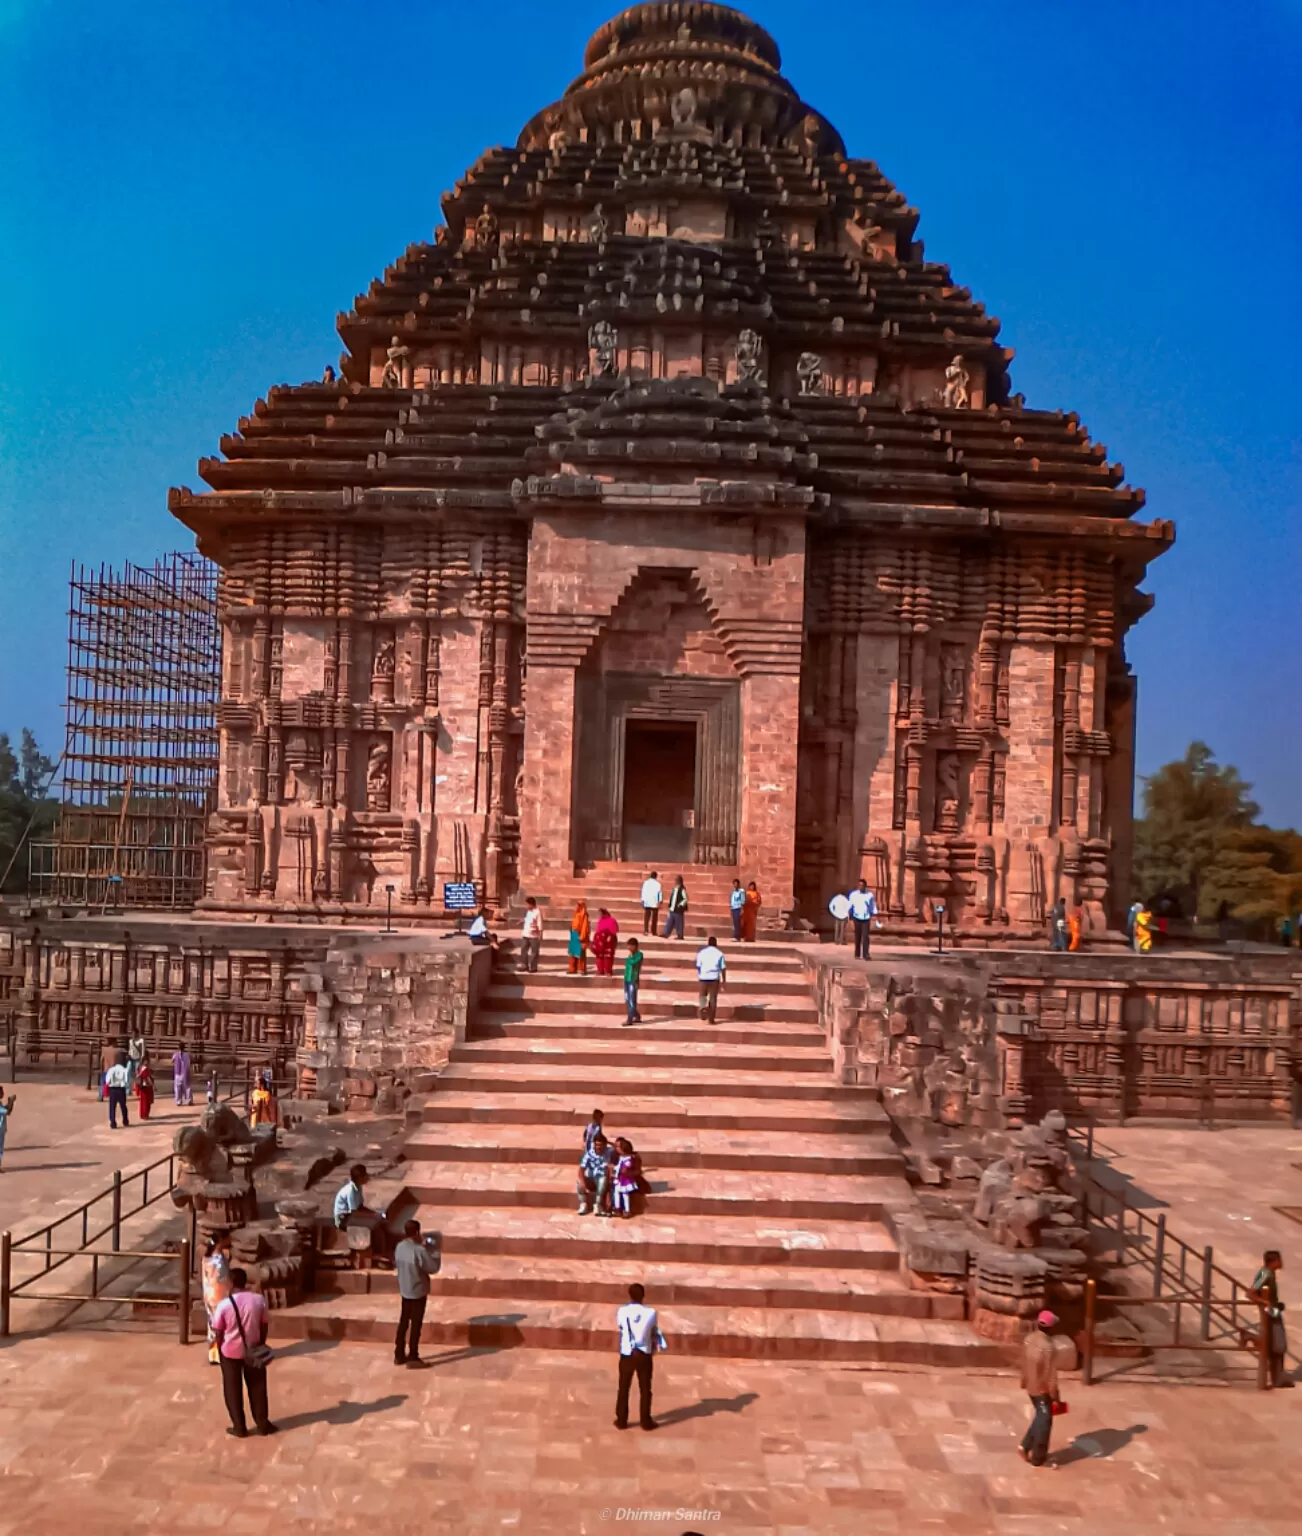 Photo of Konark Sun Temple By Dr. Dhiman Santra